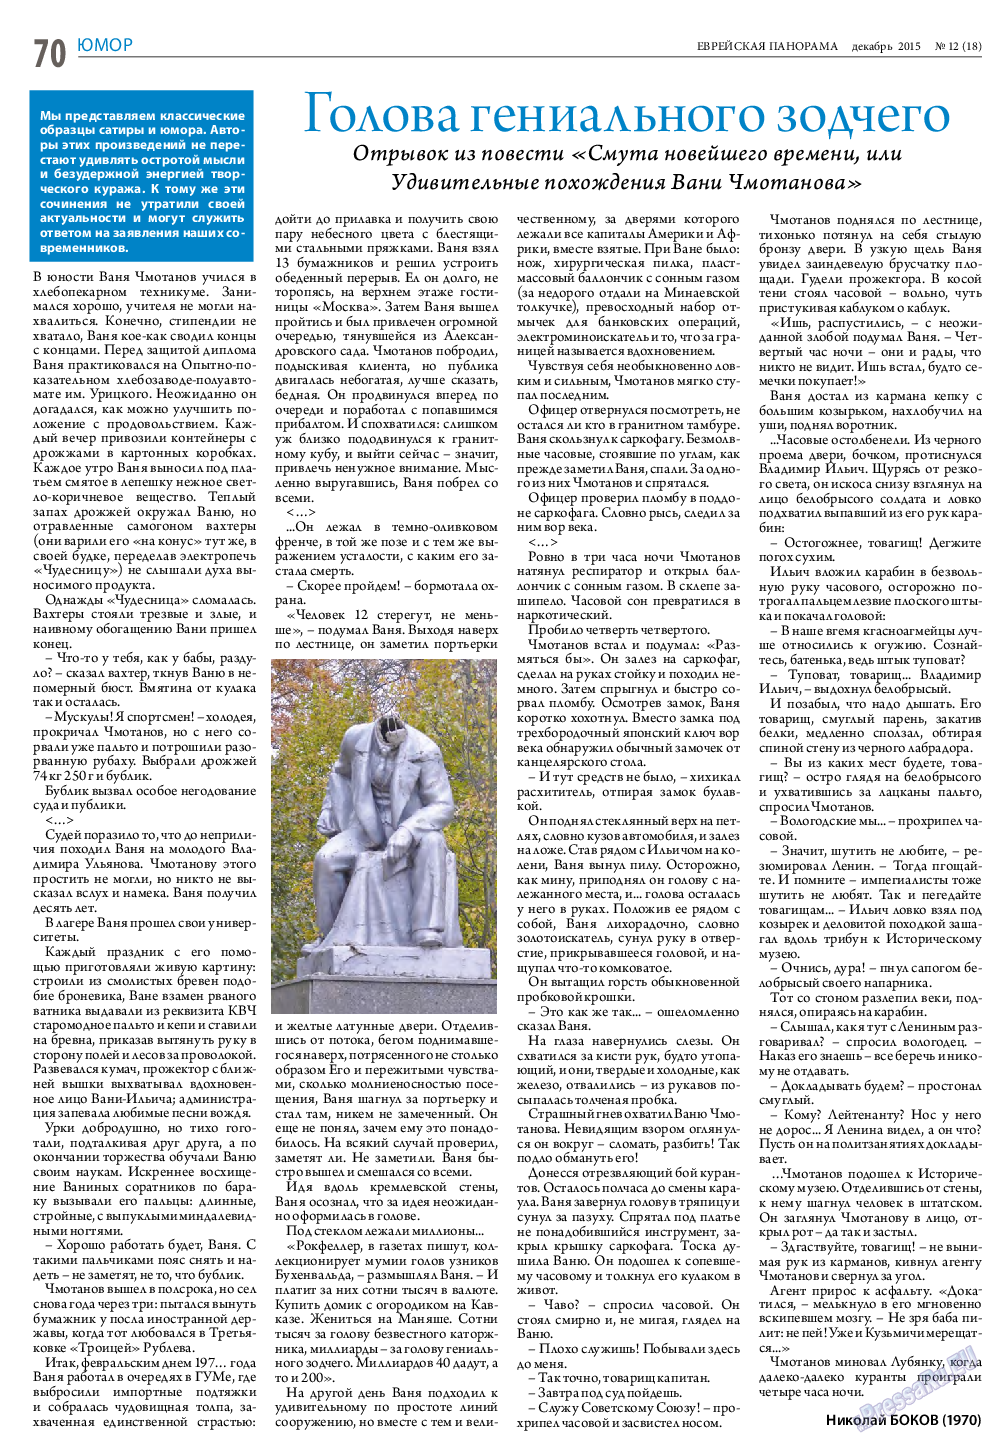 Еврейская панорама, газета. 2015 №12 стр.70